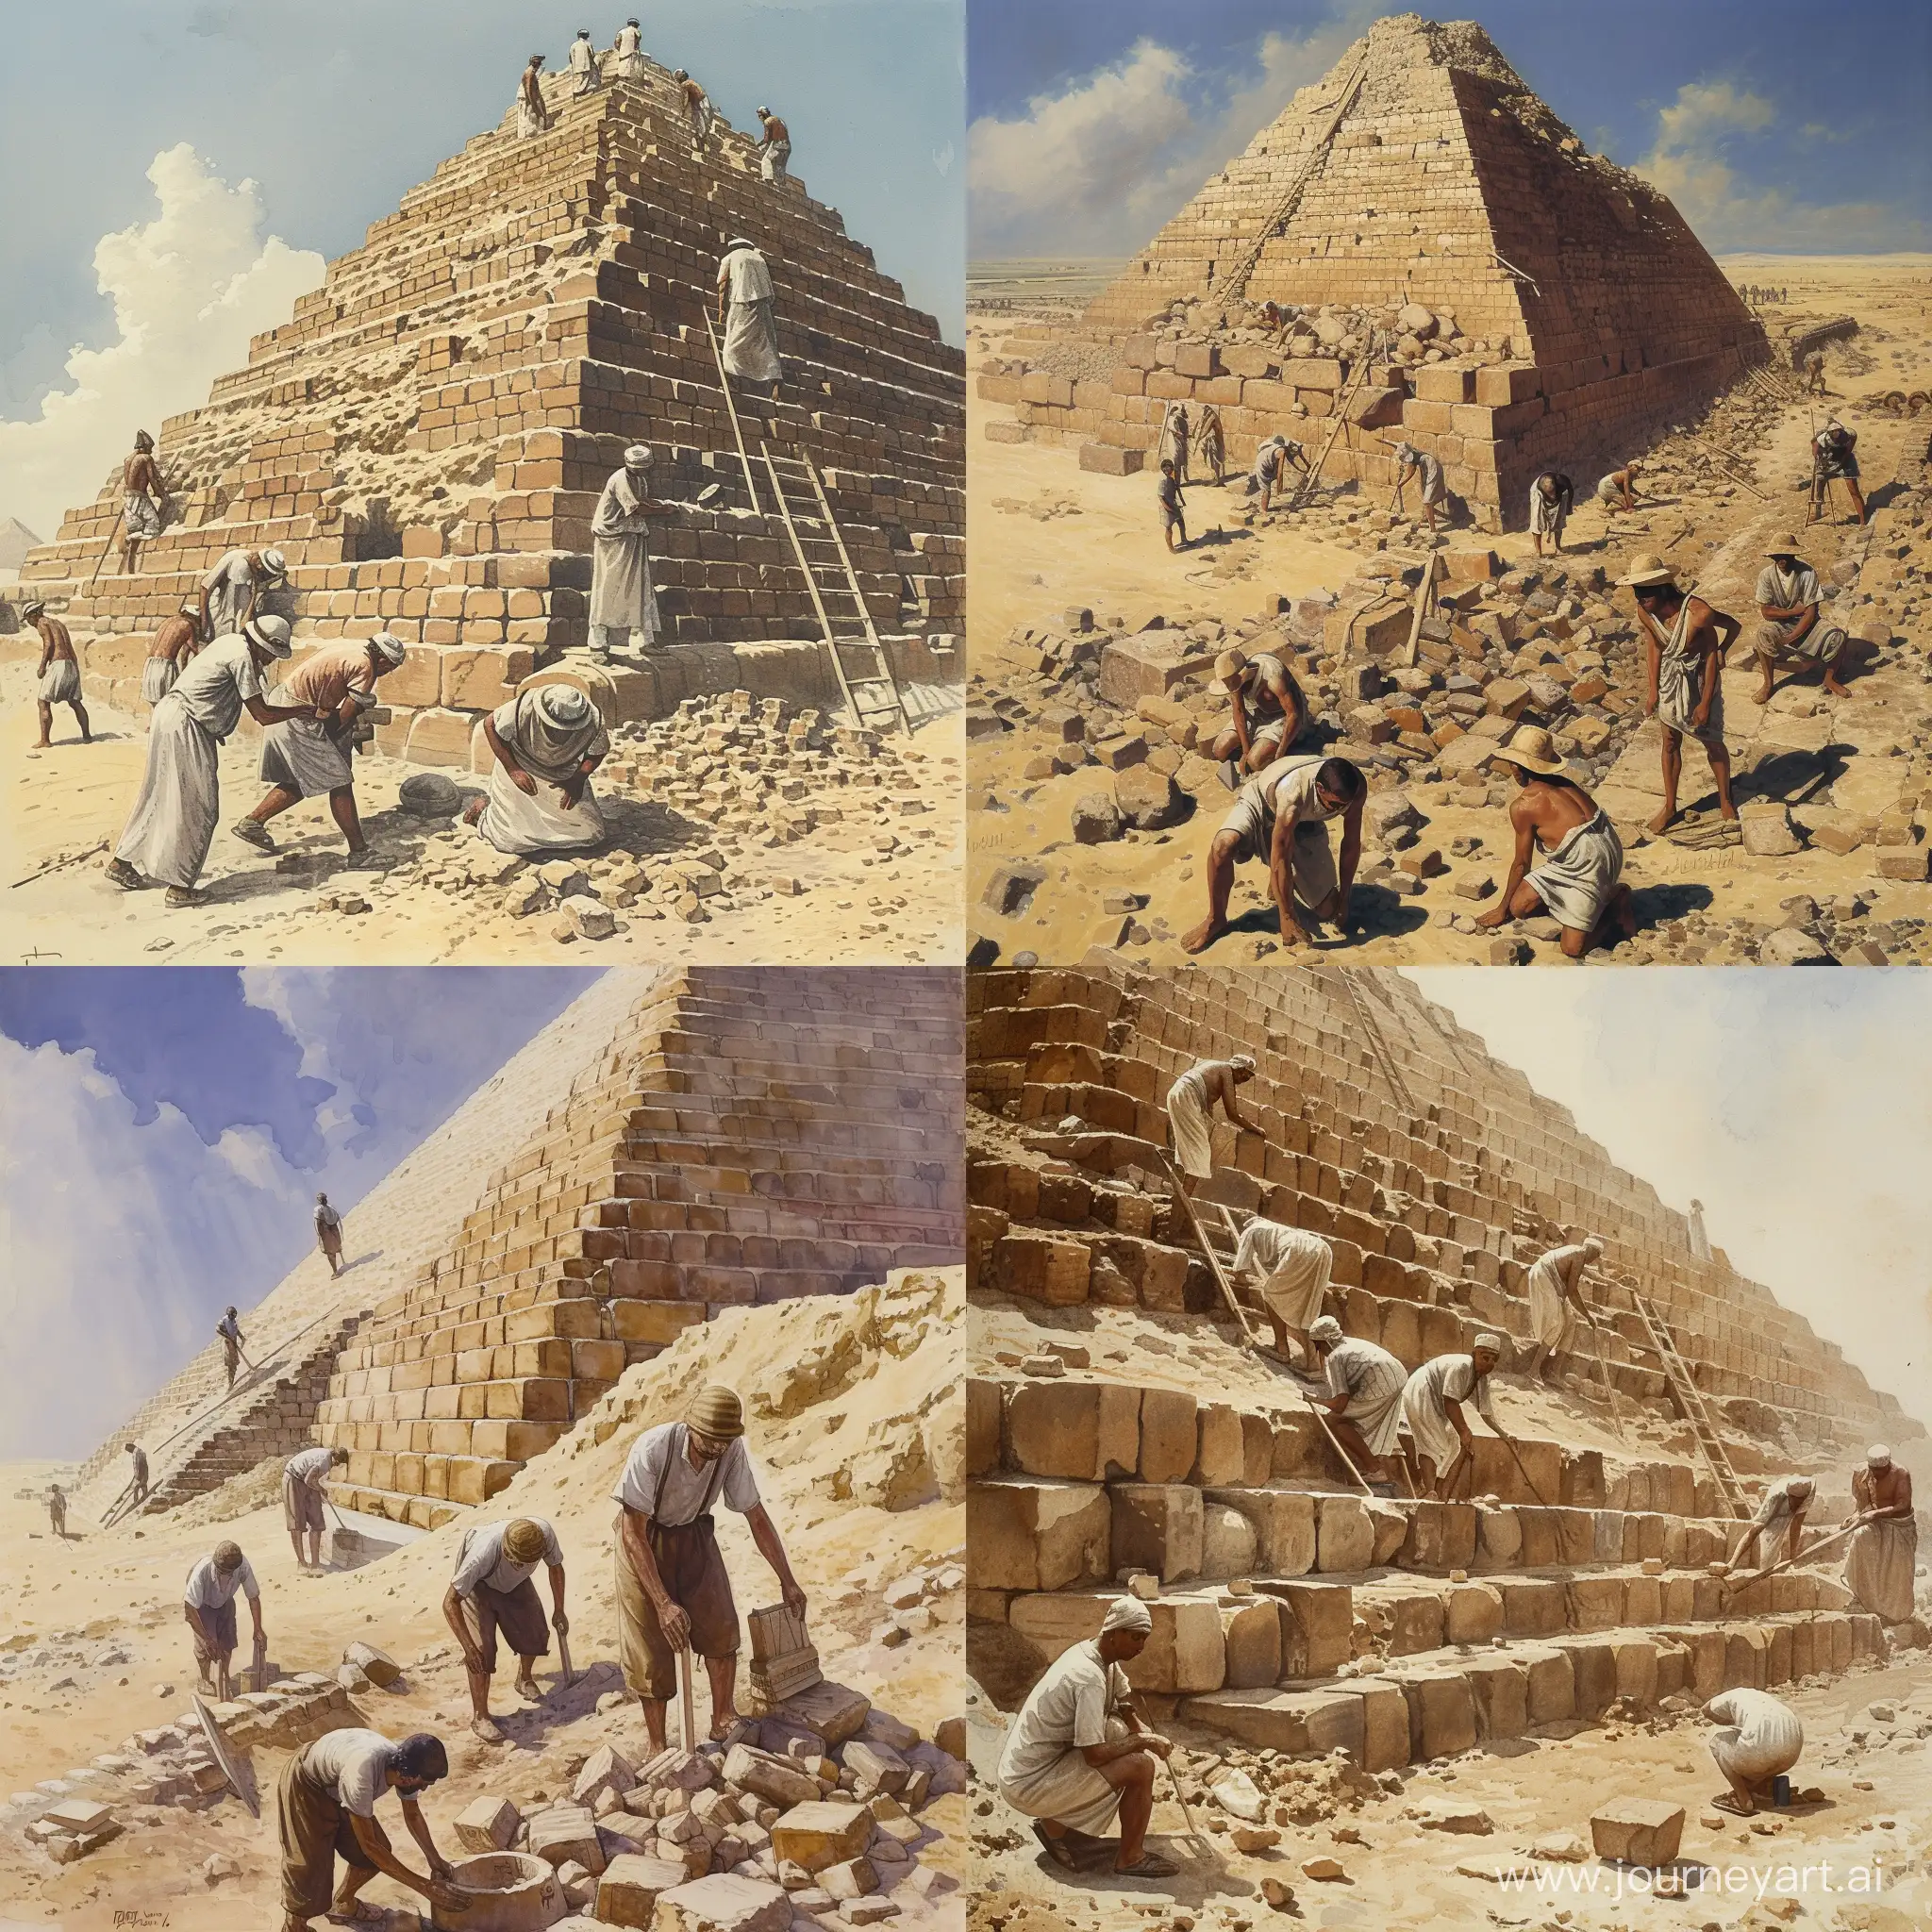 Egyptians building pyramids